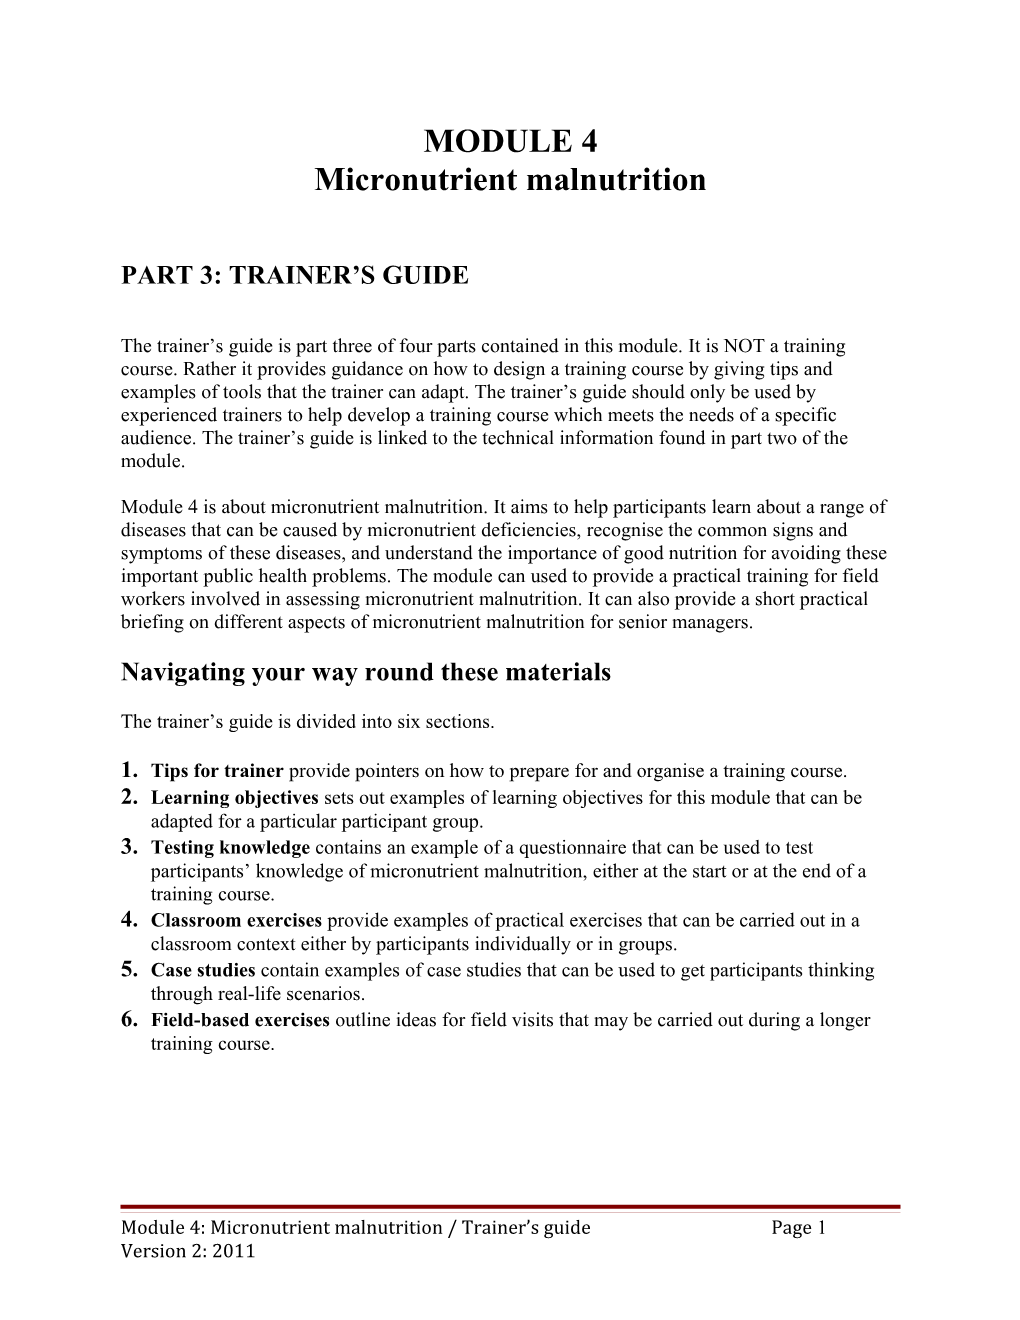 Micronutrient Malnutrition